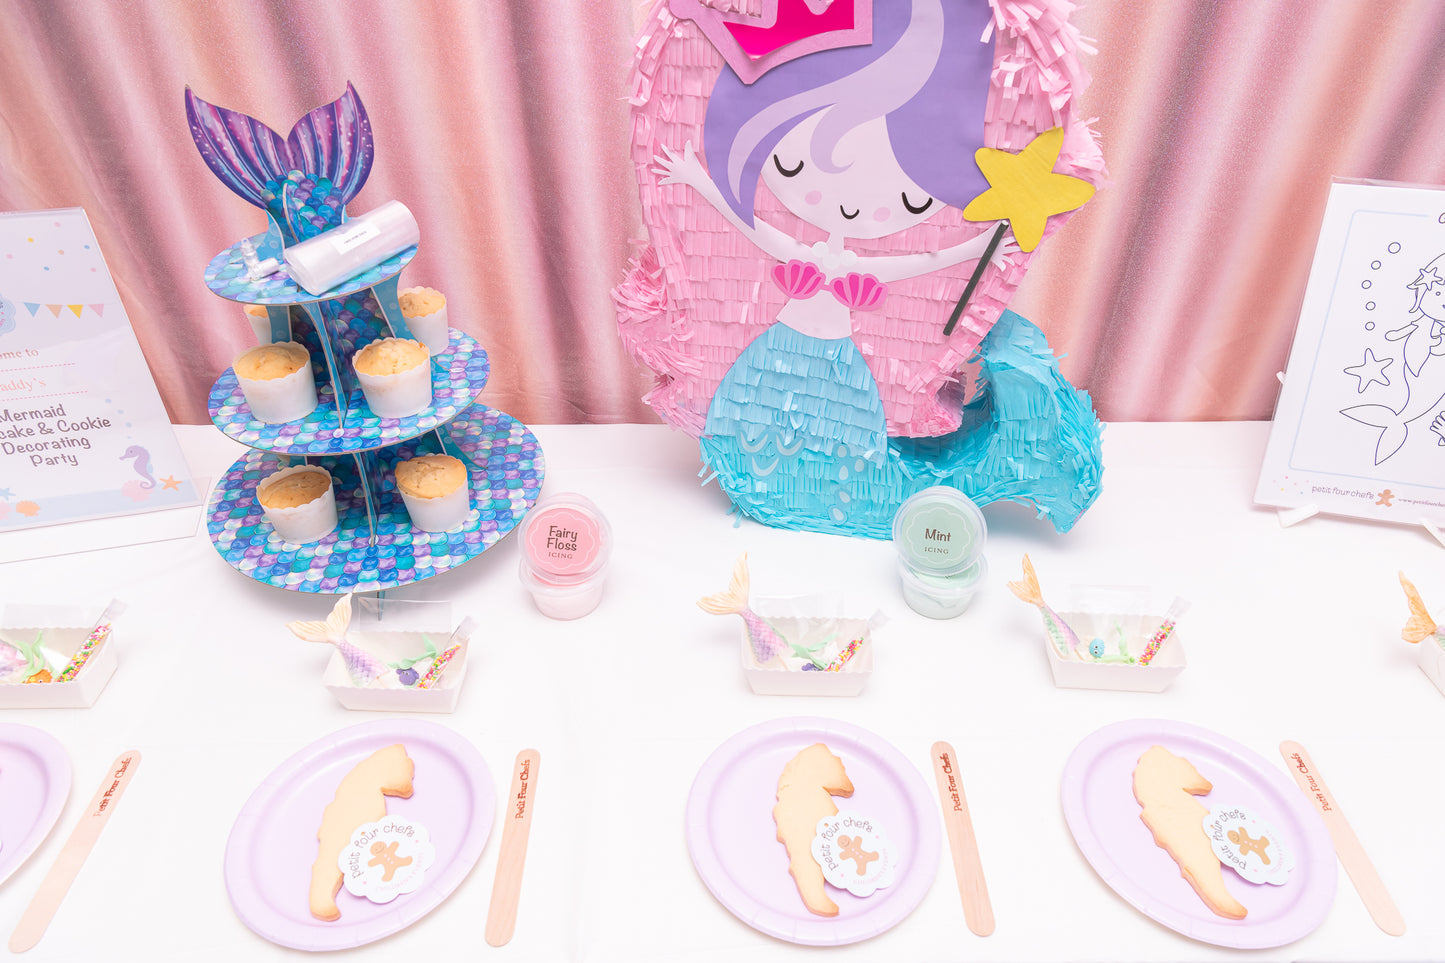 Mermaid Bake & Decorate Party Box